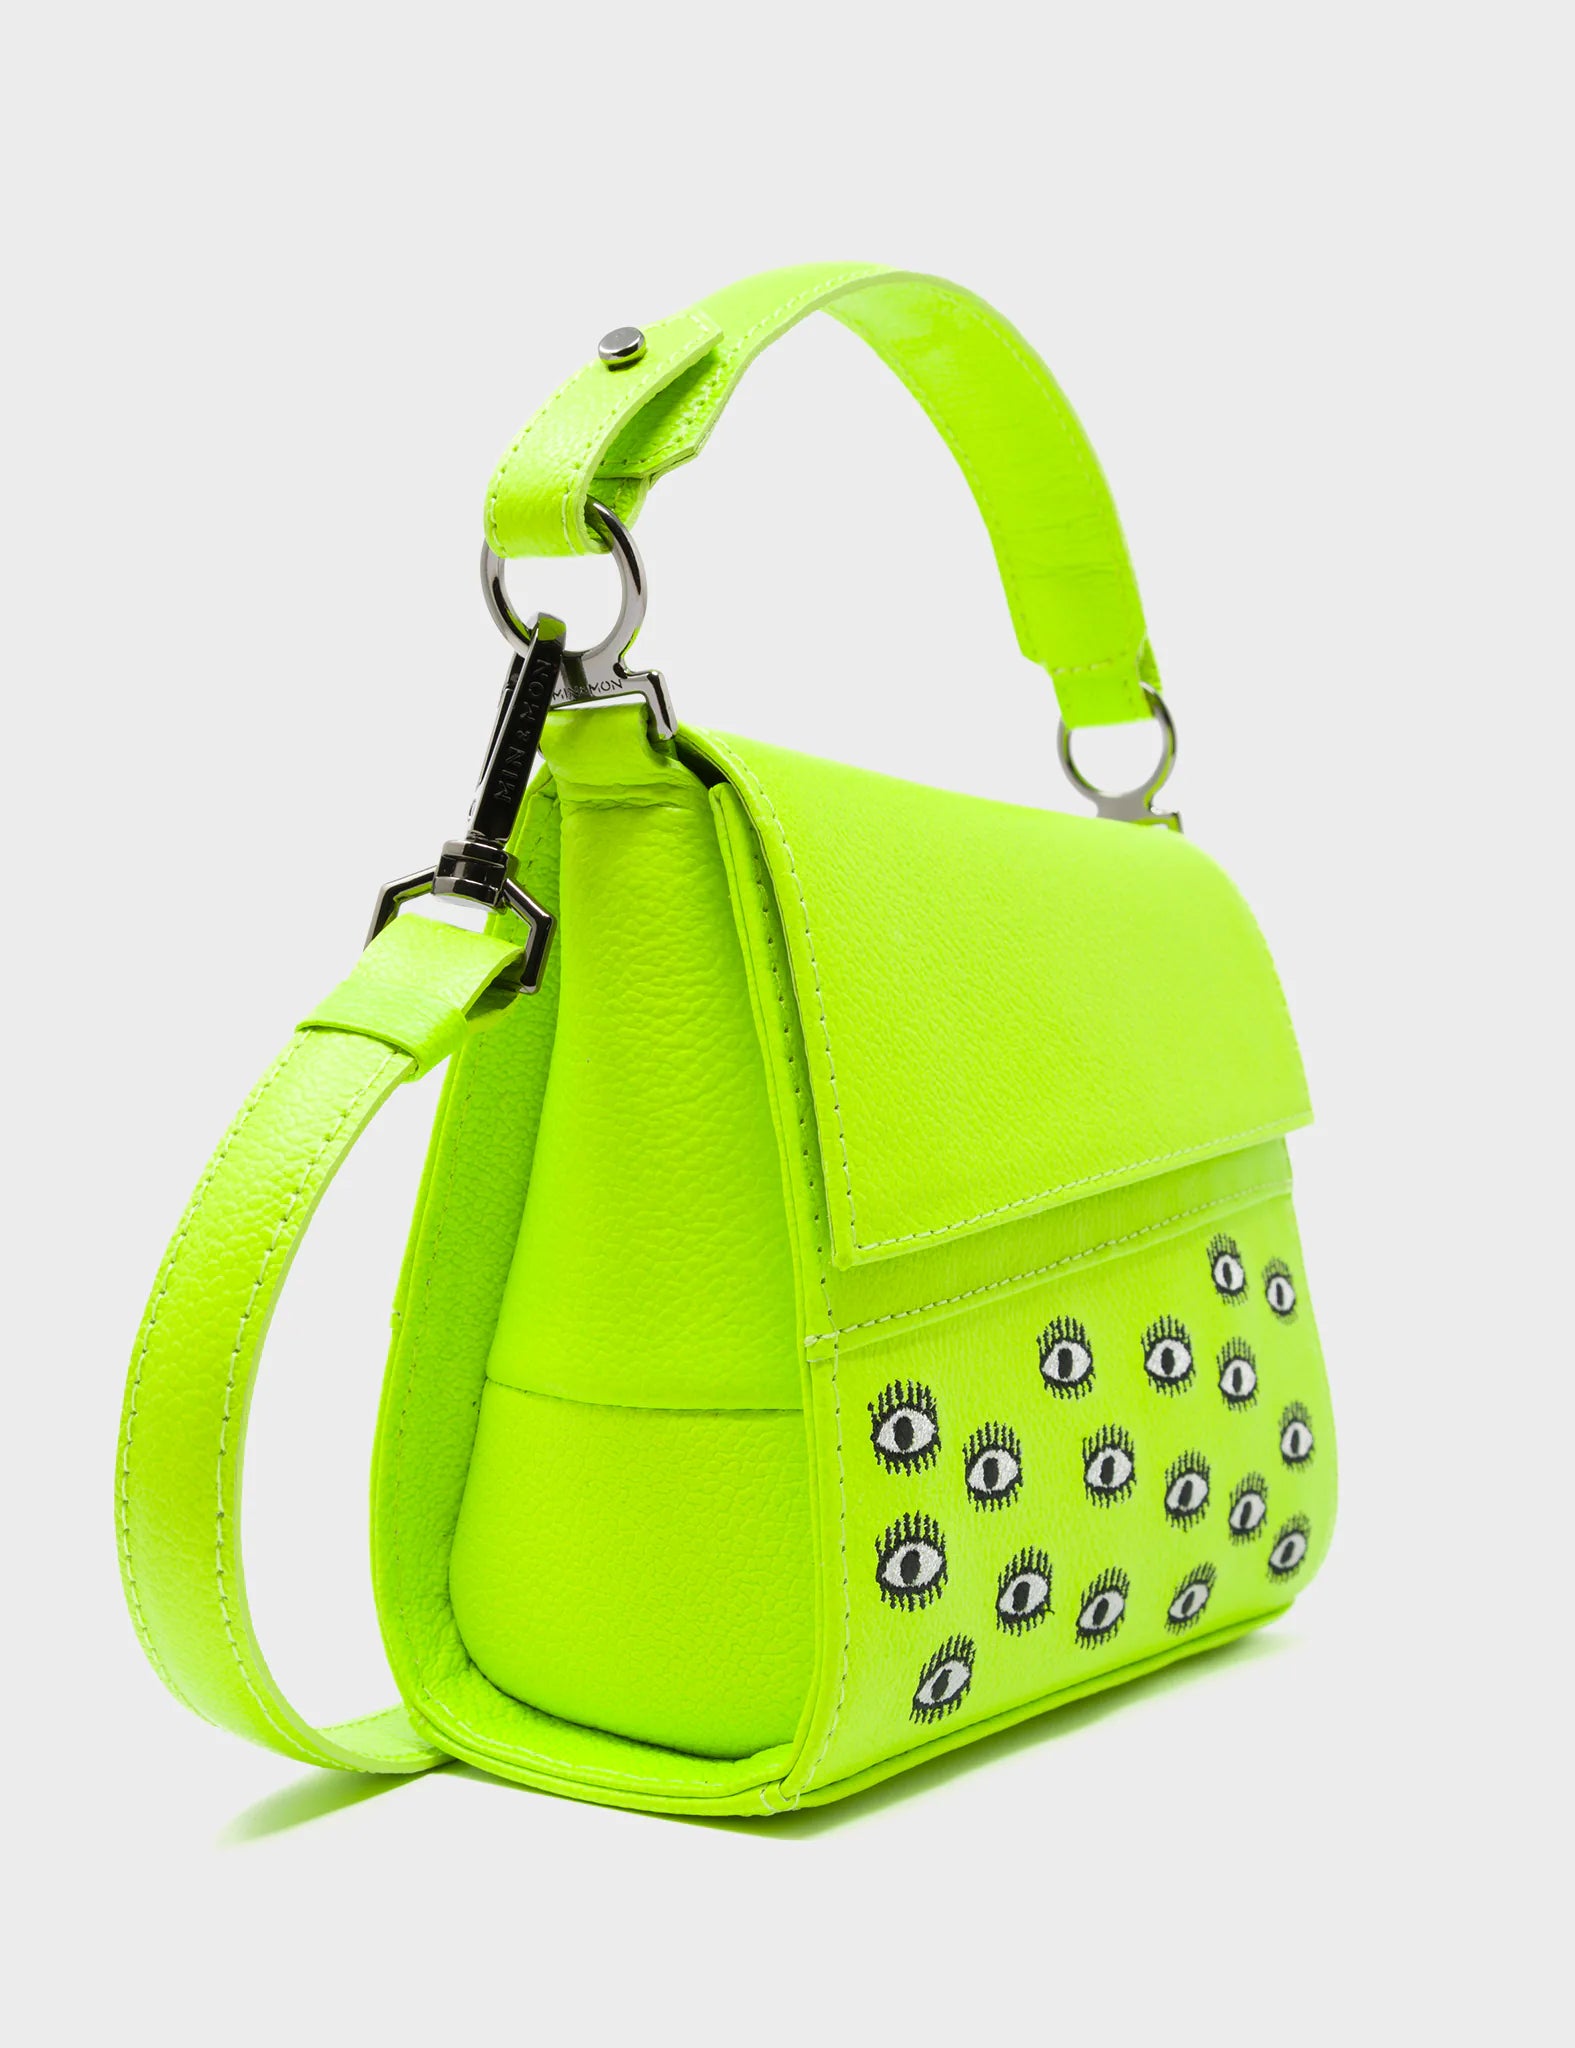 Anastasio Micro Crossbody Handbag Neon Yellow Leather - Eyes Embroidery - Side 